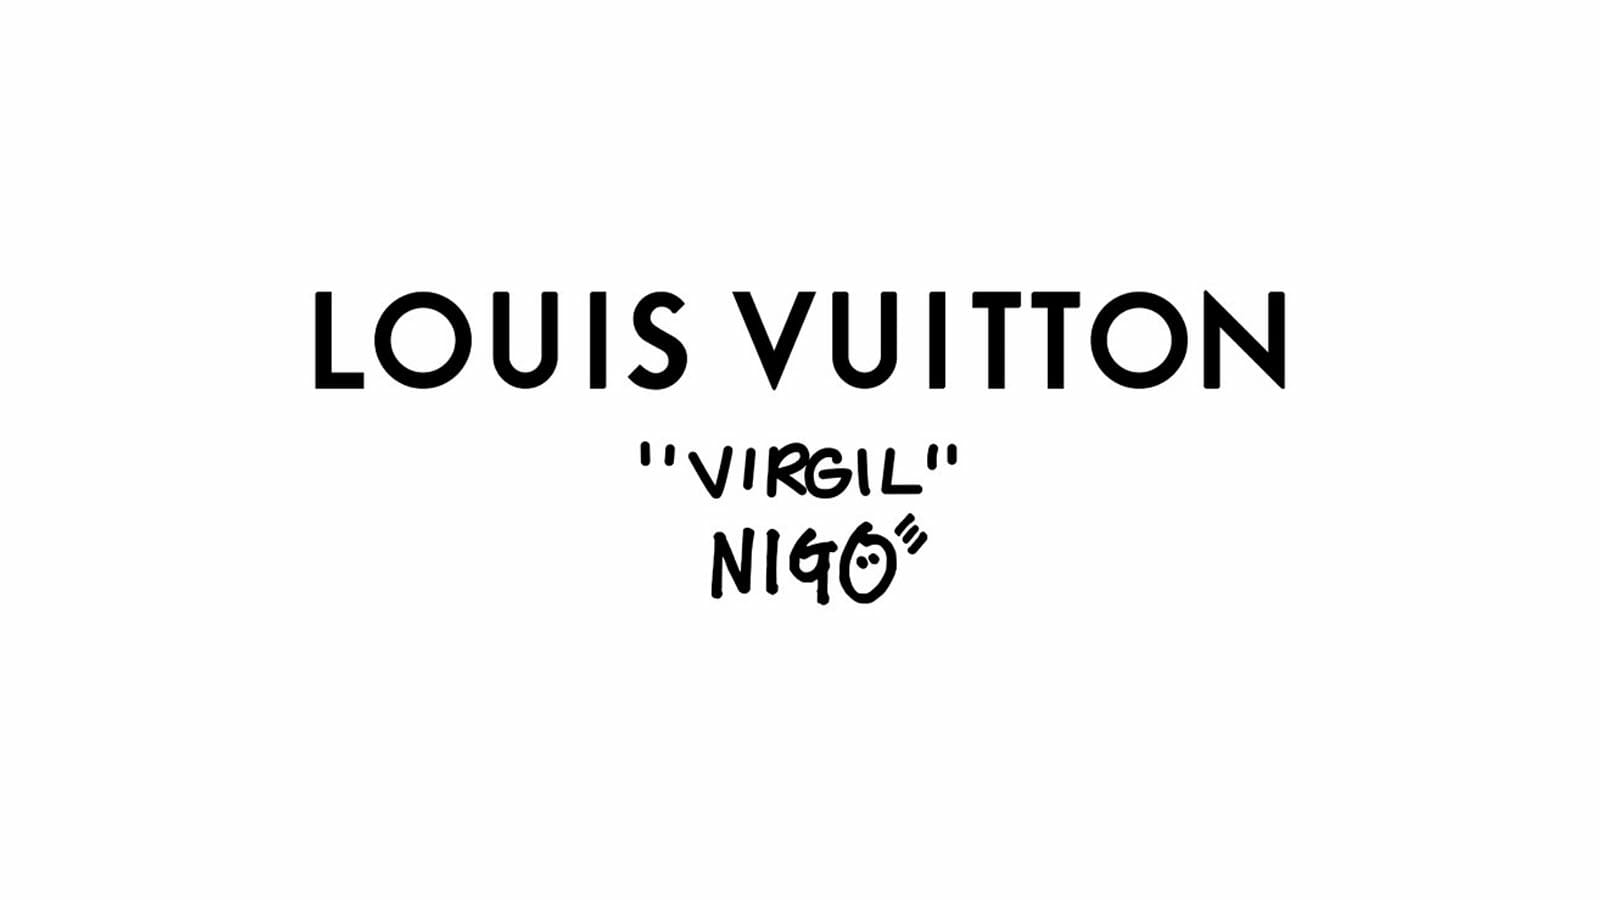 Here's a look at the Virgil Abloh X Nigo Louis Vuitton capsule